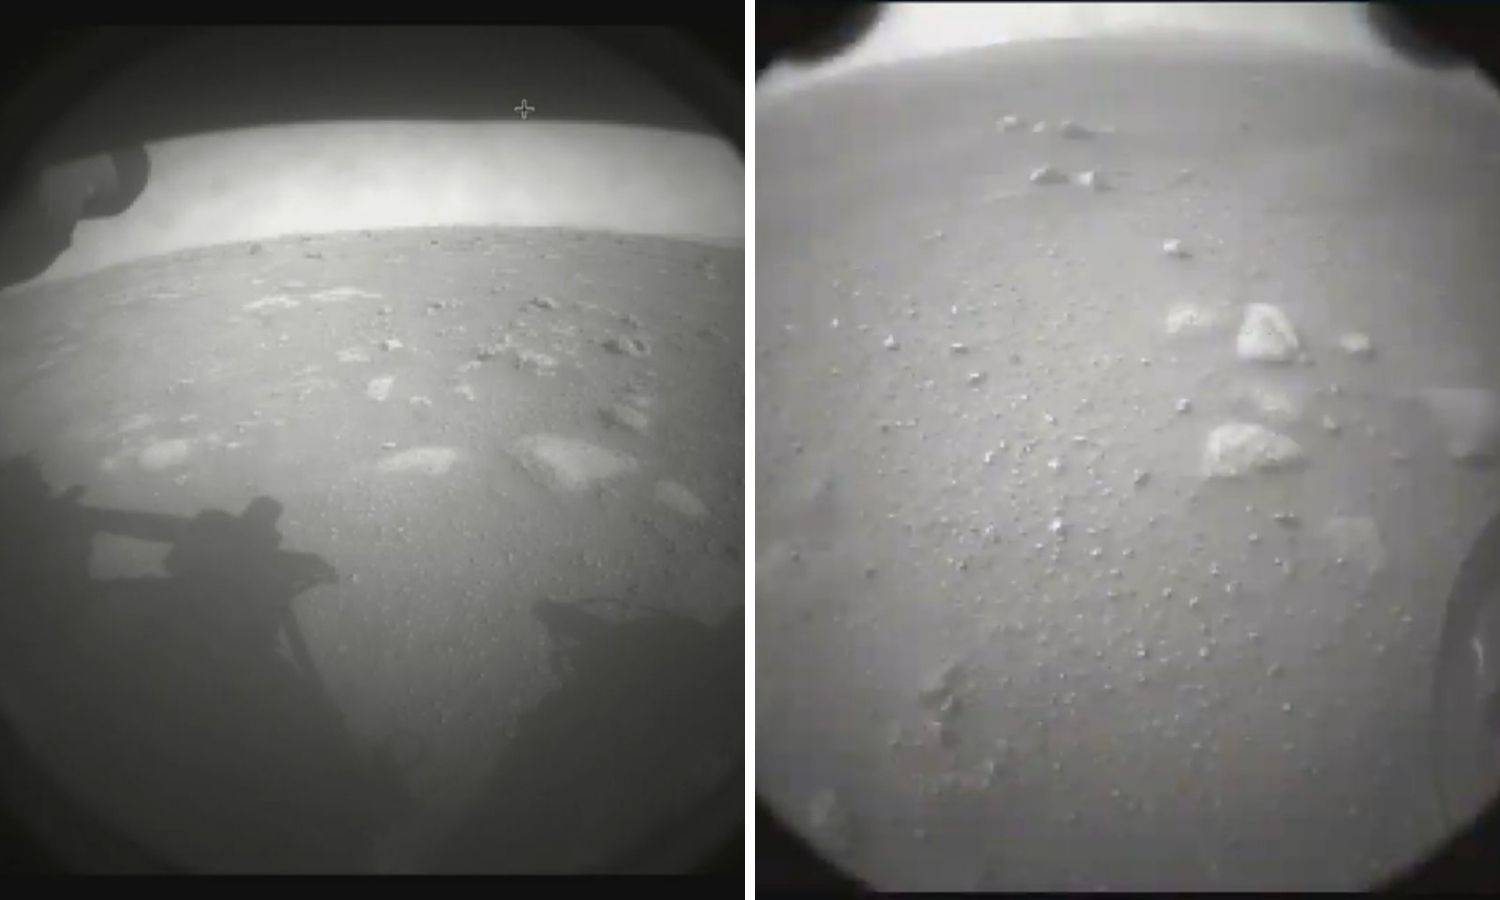 Pogledajte prve fotografije  koje je poslao Perseverance s Marsa: 'Dobro došli na krater Jezero!'